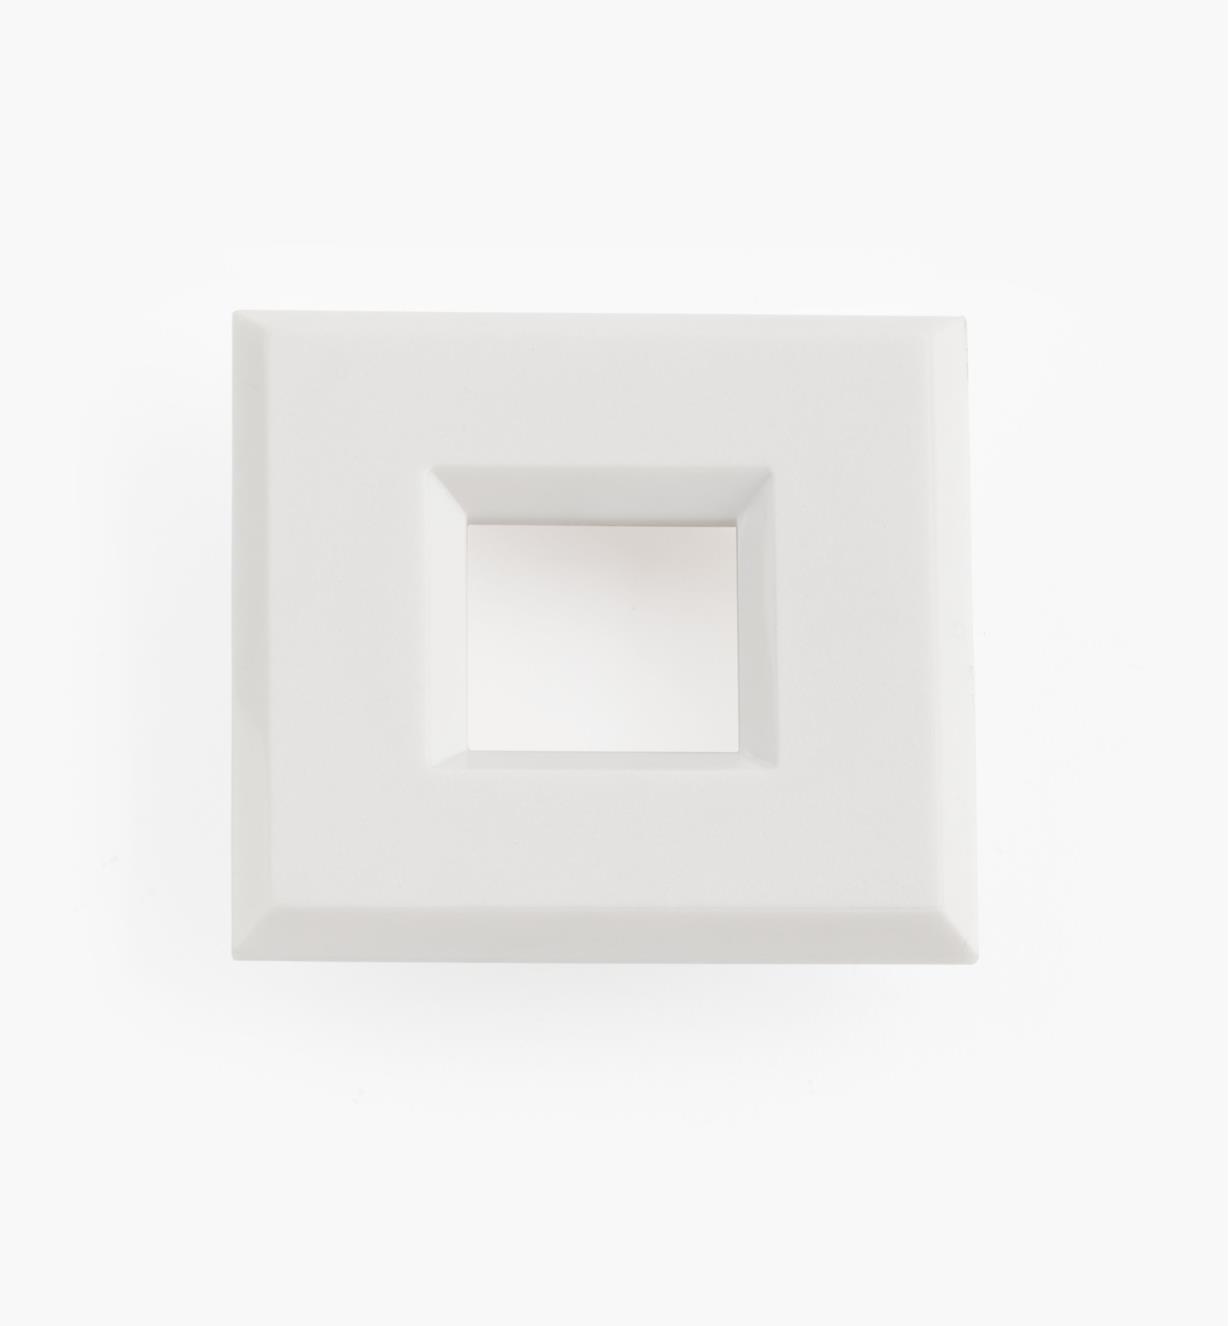 00U4365 - 1 9/16" White Square Polycarbonate Trim Ring